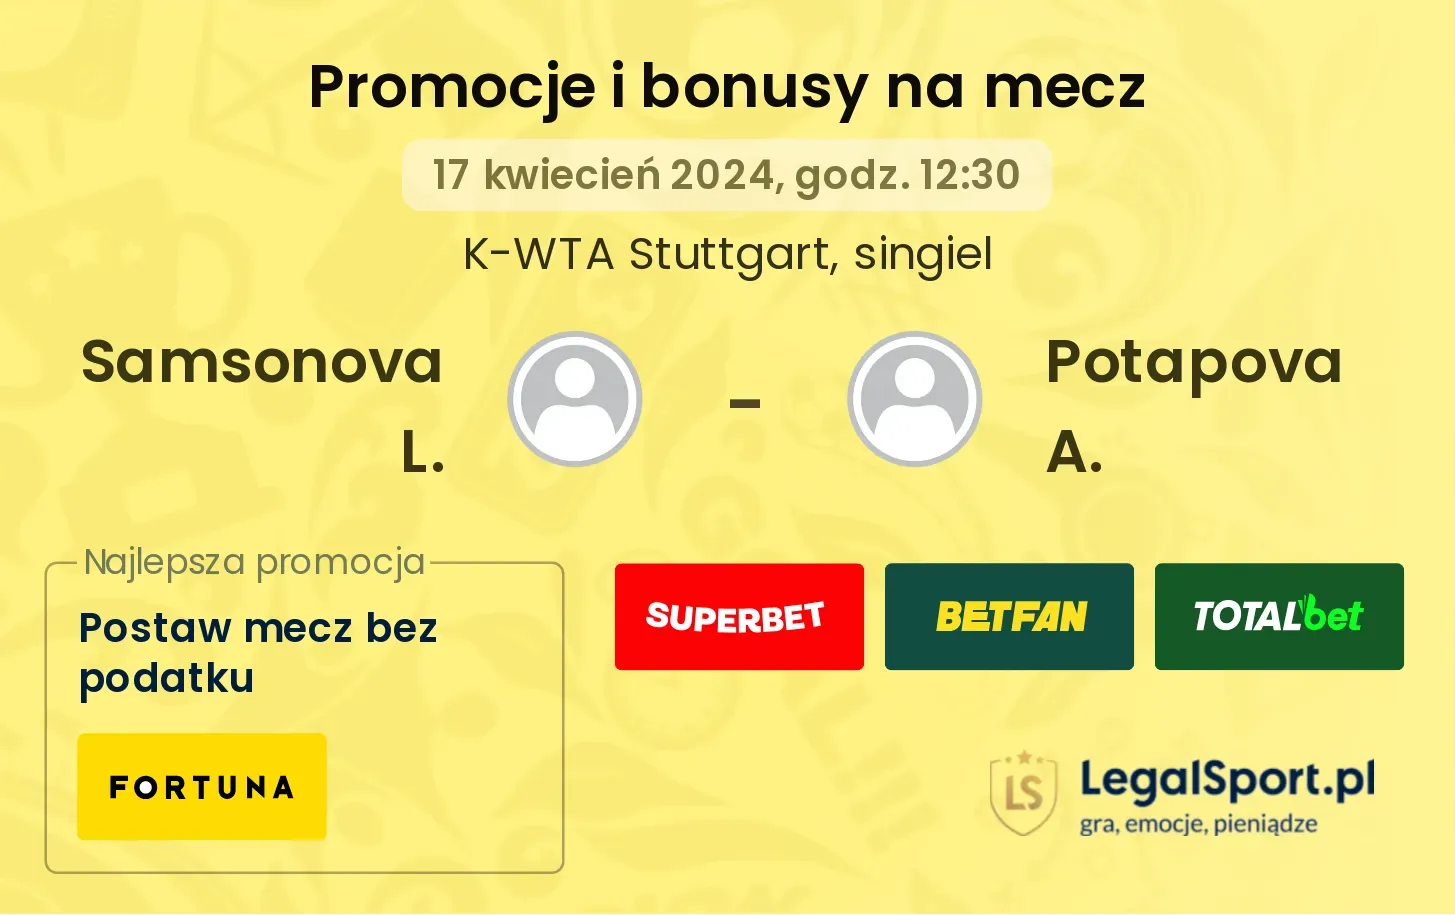 Samsonova L. - Potapova A. promocje bonusy na mecz